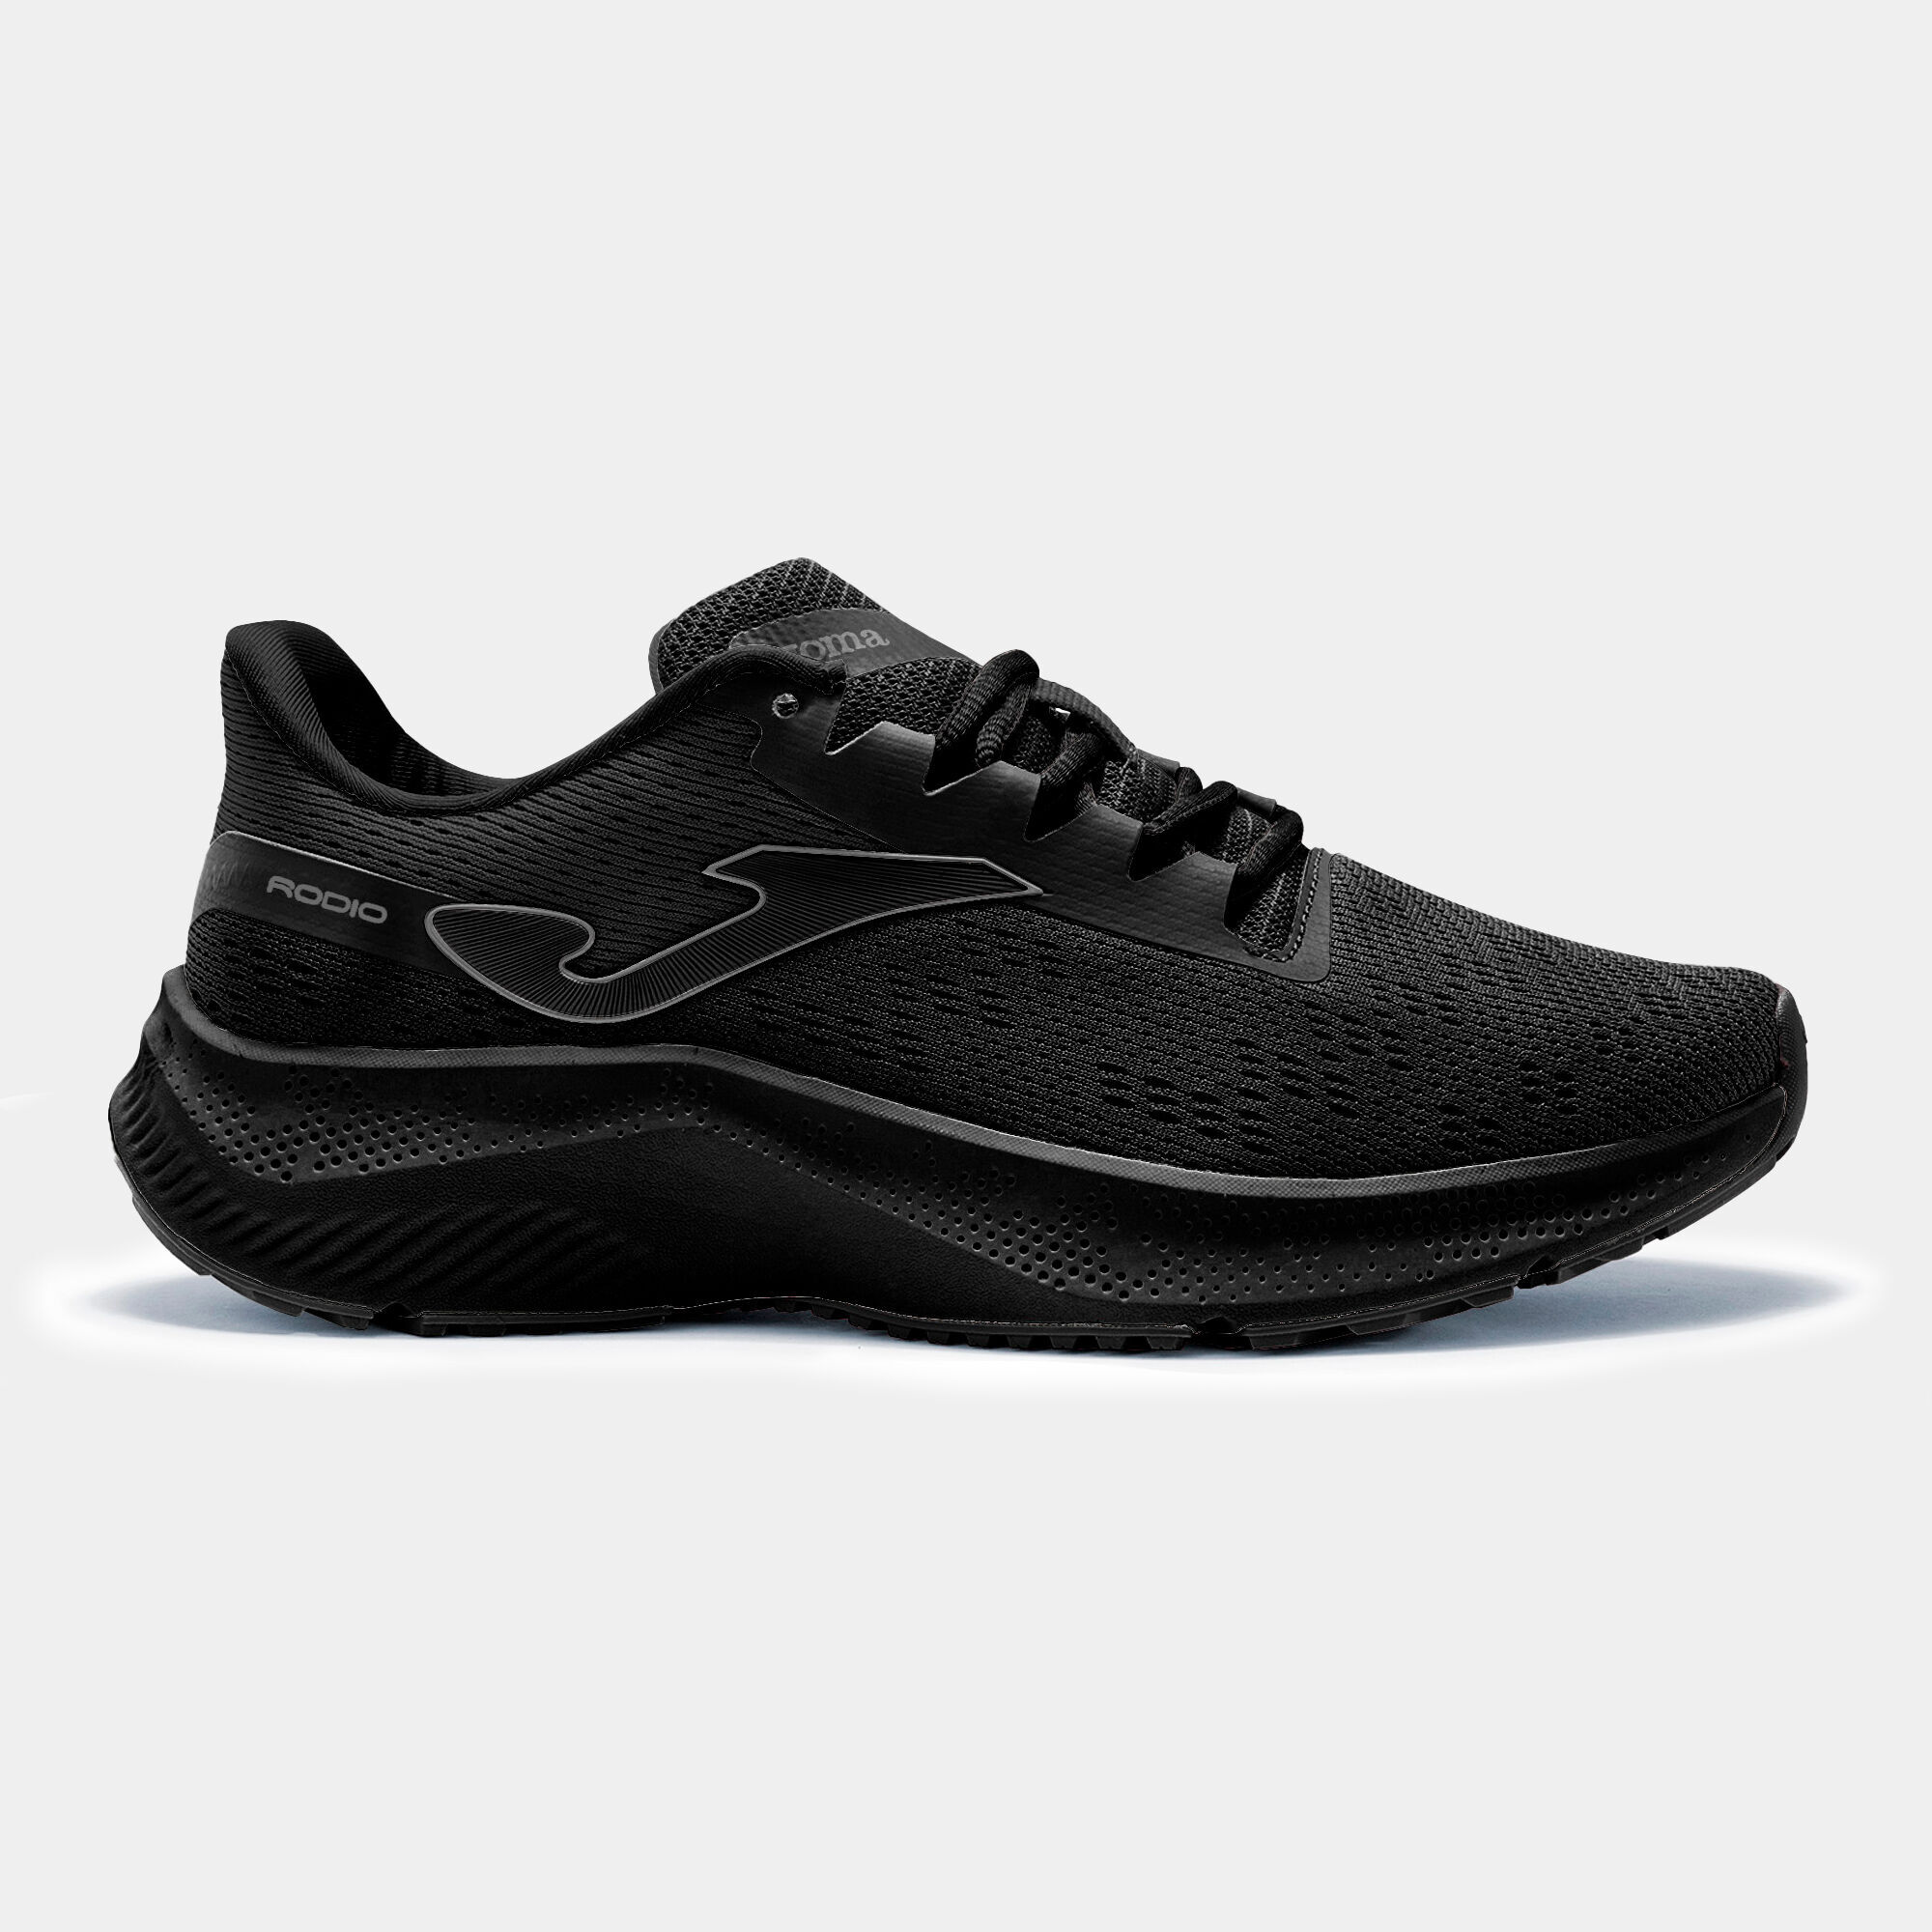 Мужские кроссовки для бега Joma Rodio RRODIW2231 | Интернет-магазин  Five-sport